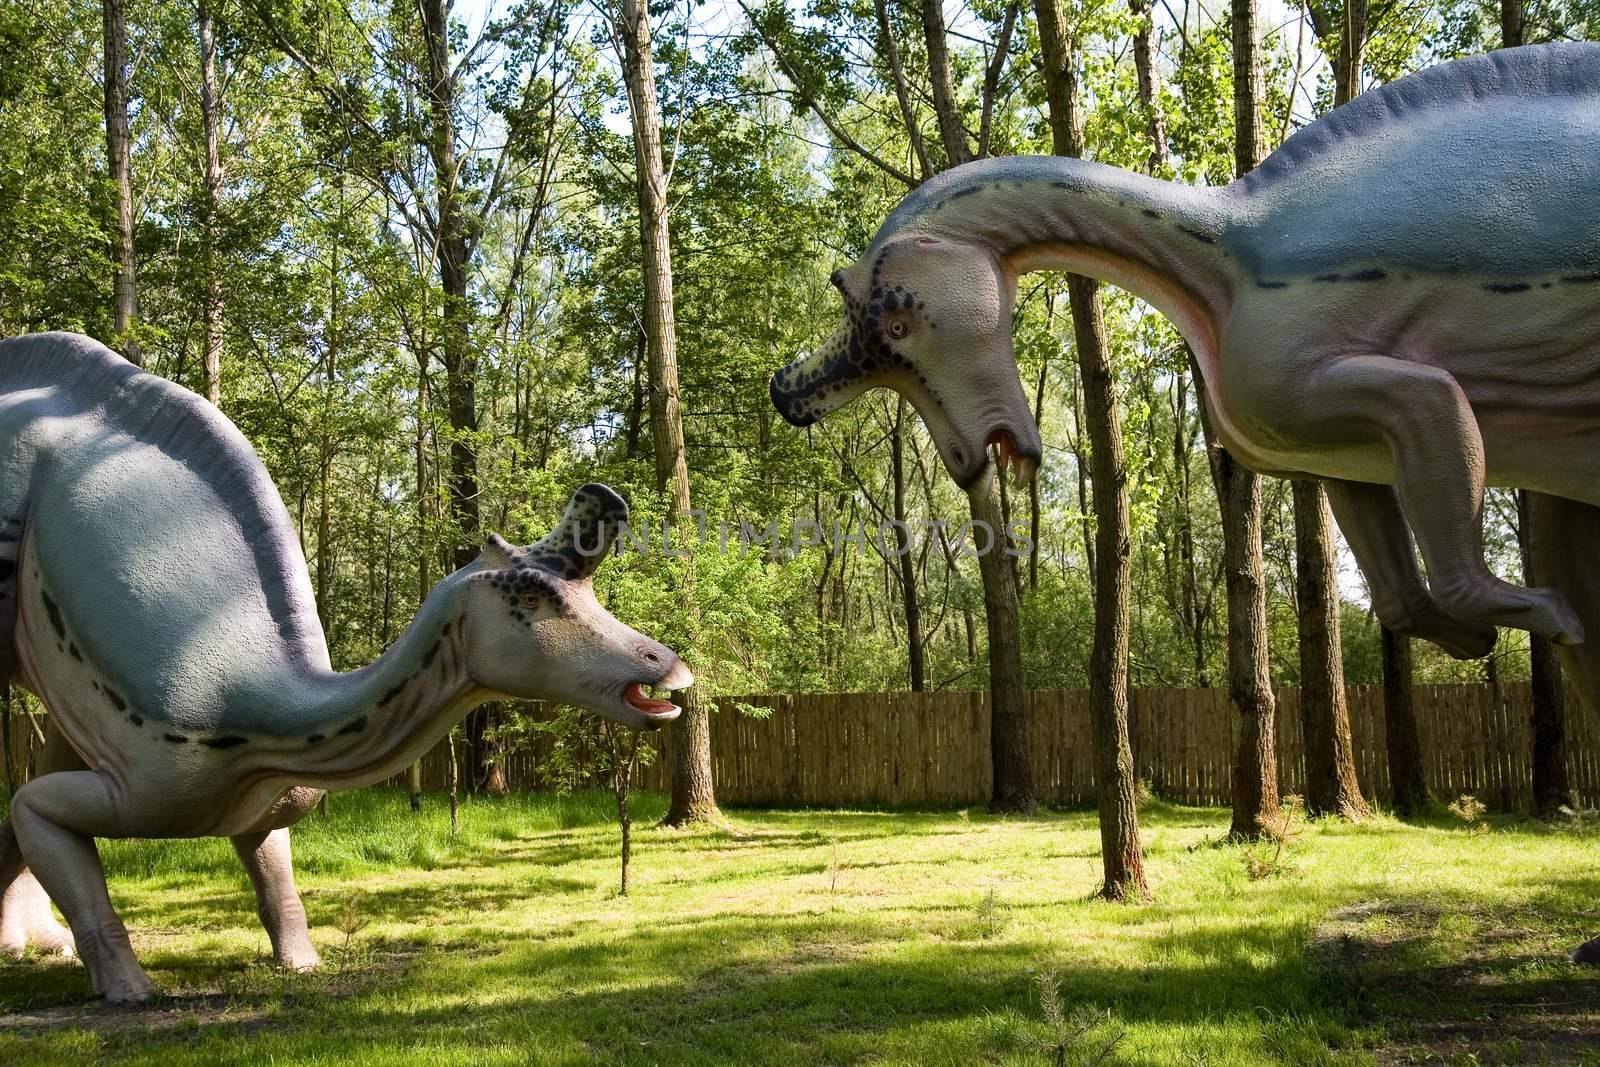 Jurassic park - set of dinosaurs - Lambeosaurus lambei